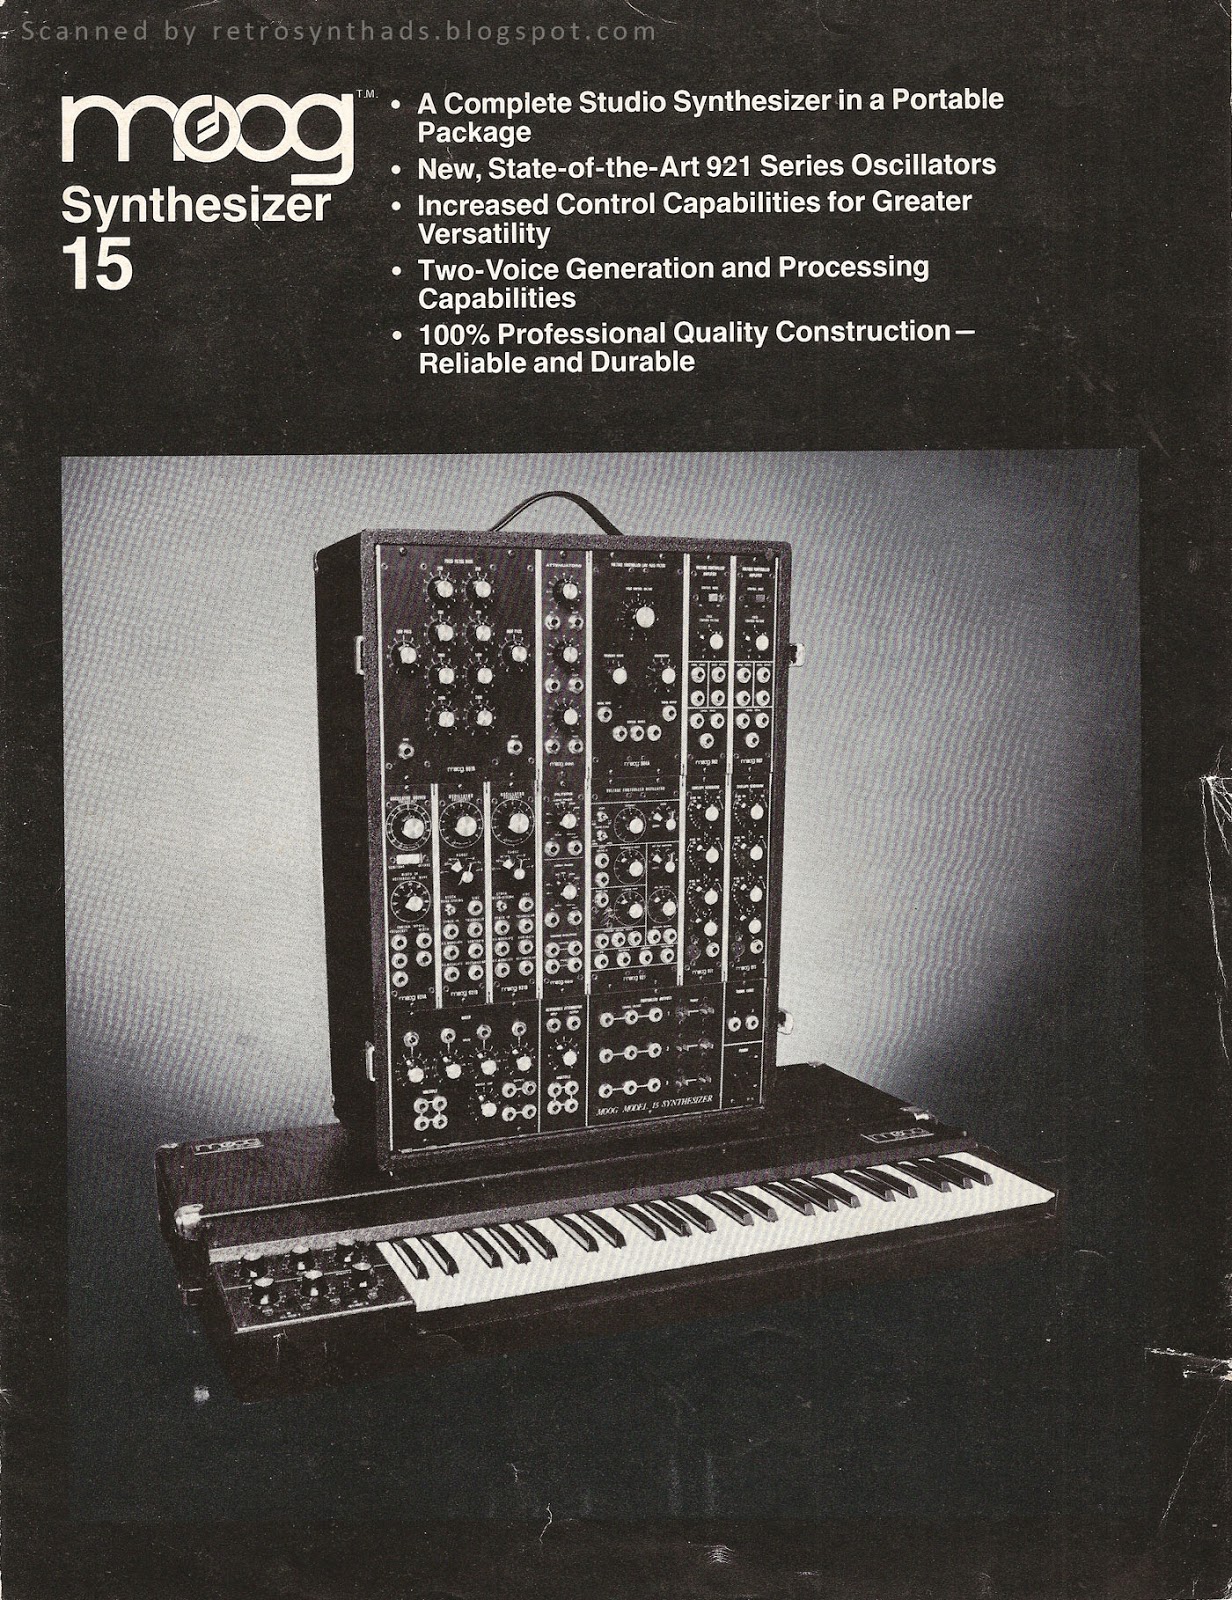 http://retrosynthads.blogspot.ca/2014/05/moog-synthesizer-15-modular-system-six.html